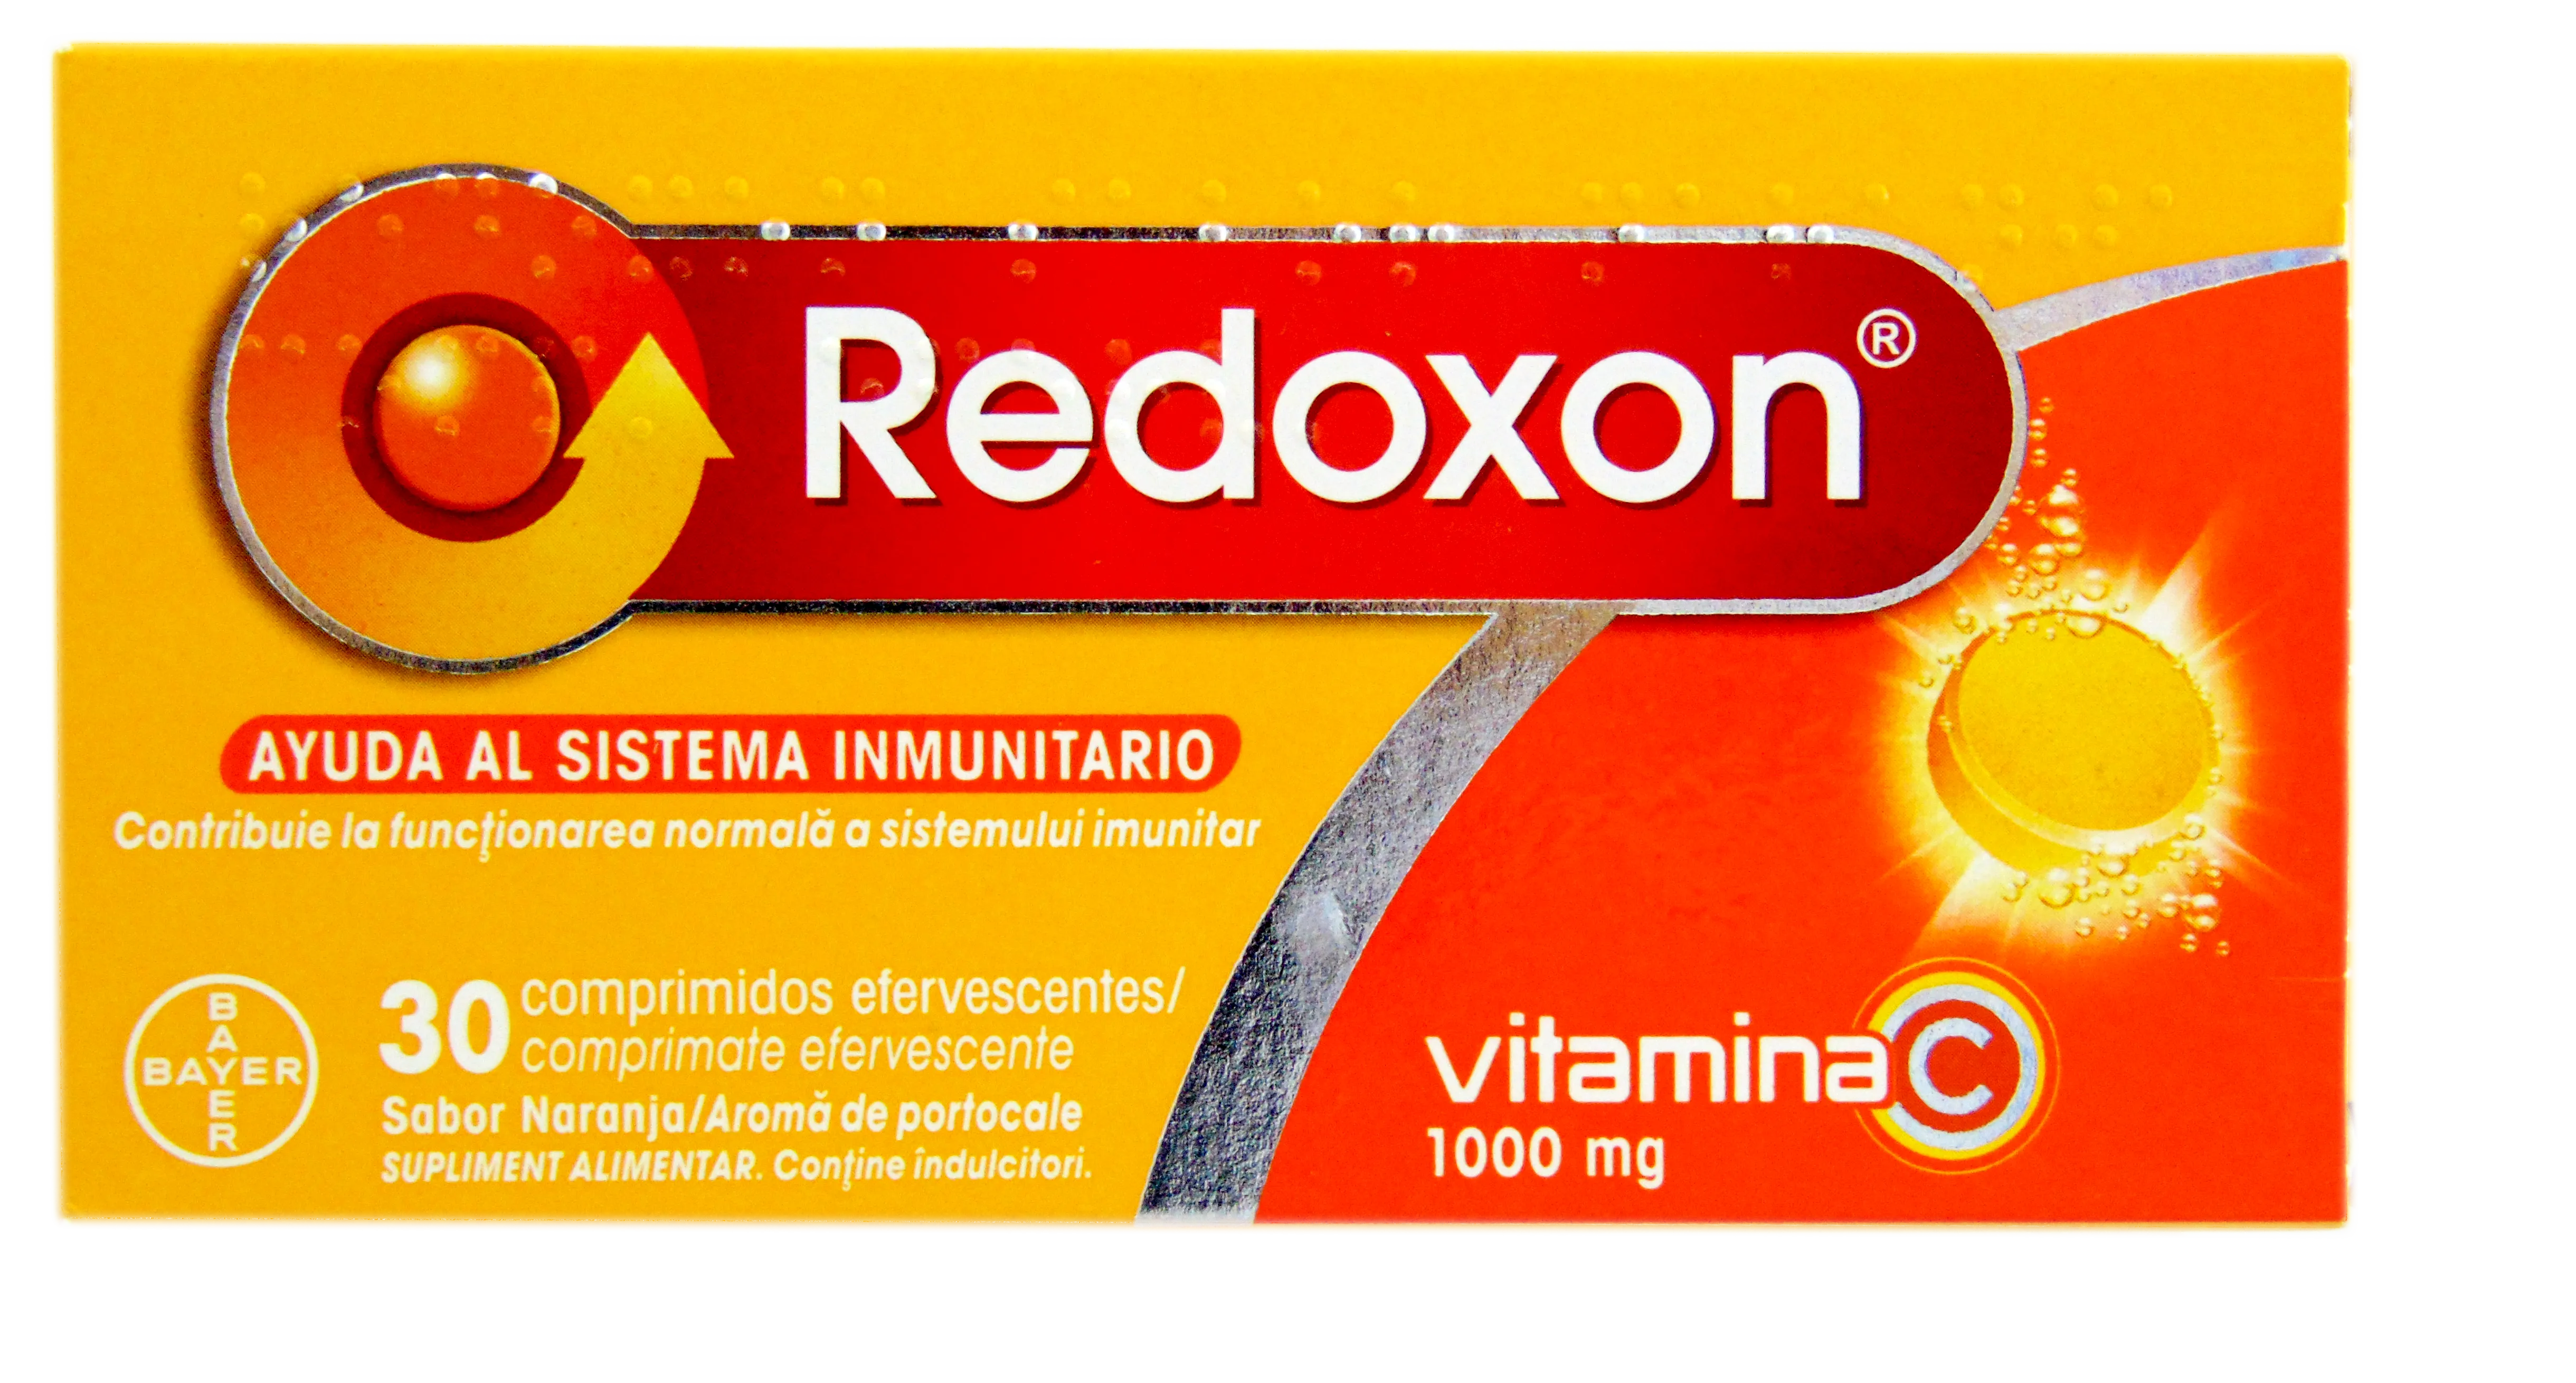 Imunitate - Redoxon vitamina C portocale 1000mg x 30 comprimate efervescente, medik-on.ro